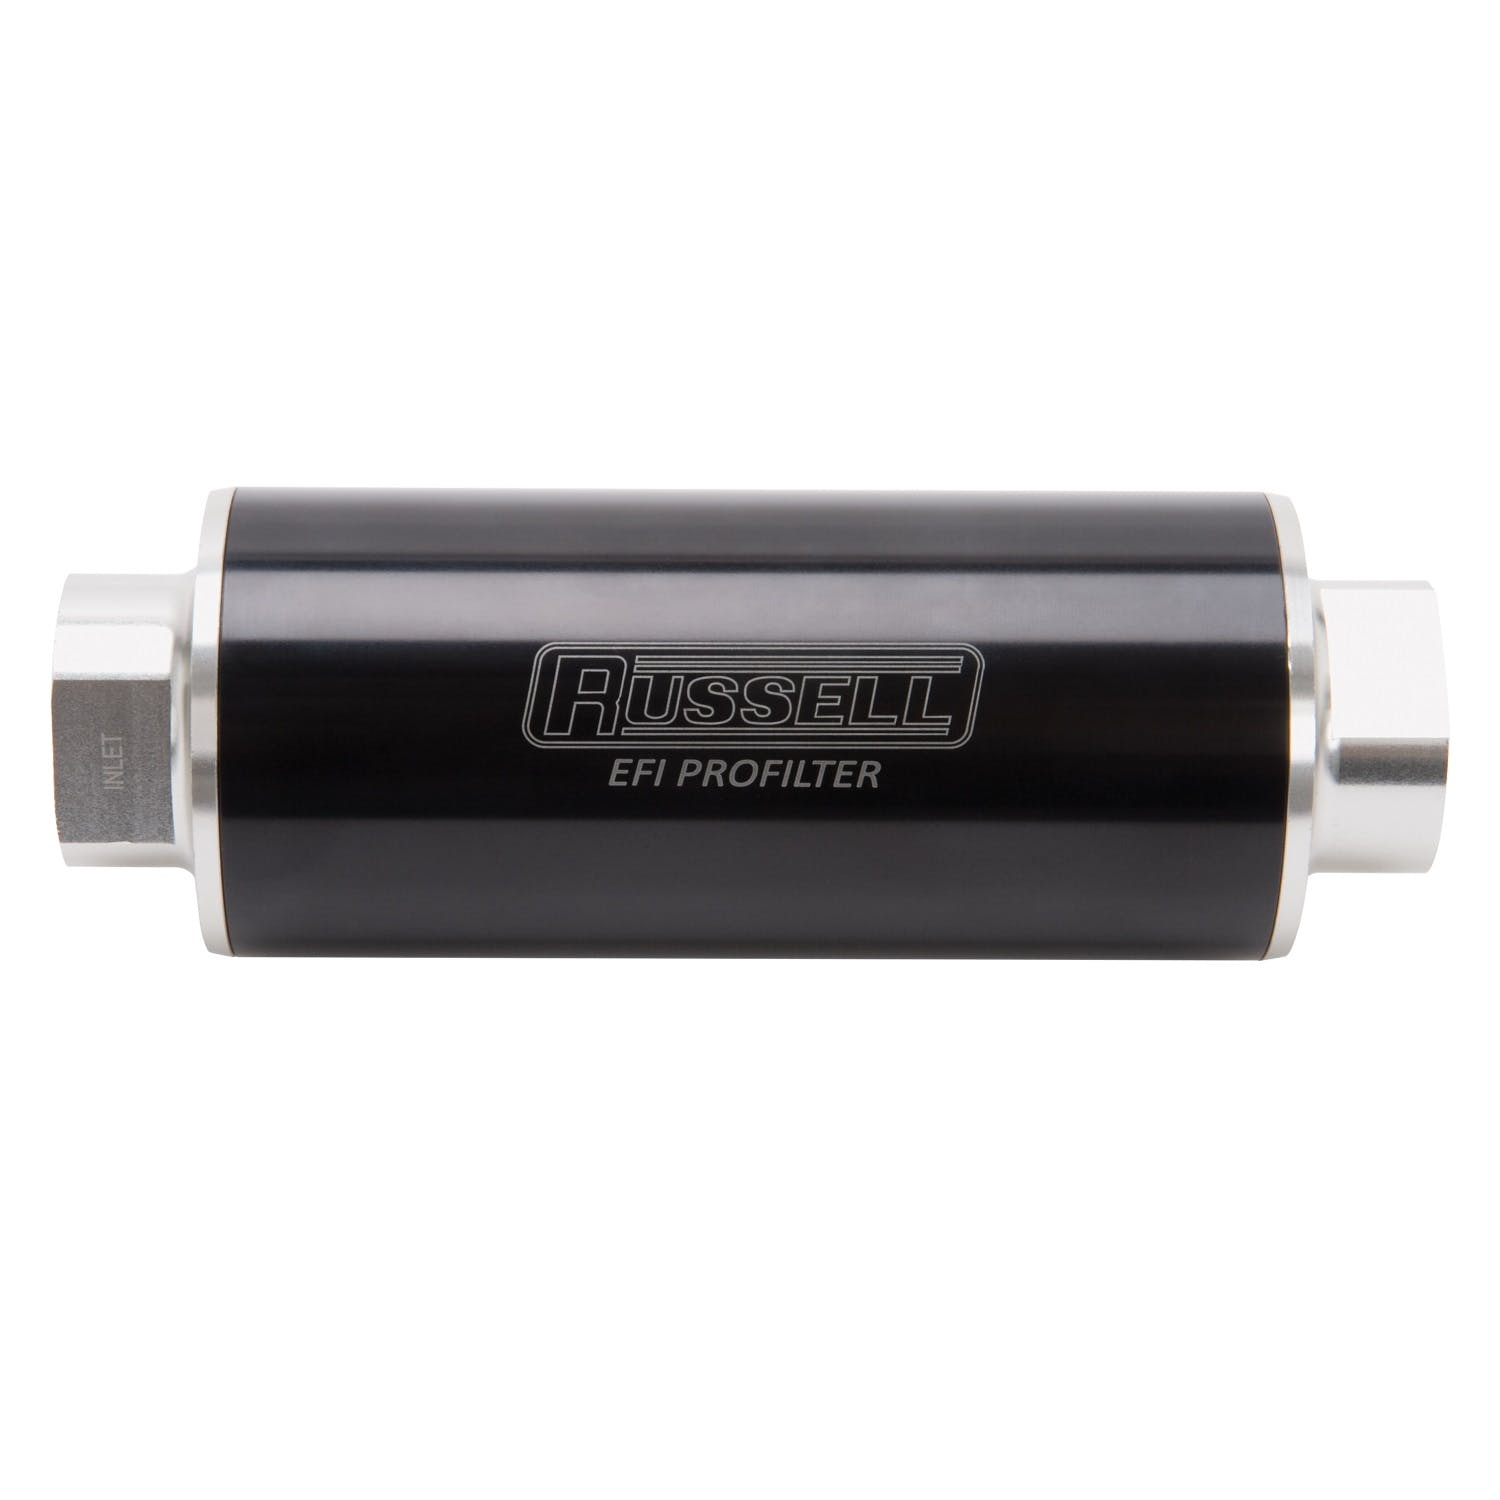 Russell 649260 Fuel filter, Profilter, 6” long, 60 Micron, #10 AN Inlet/#10 AN Outlet, Blu